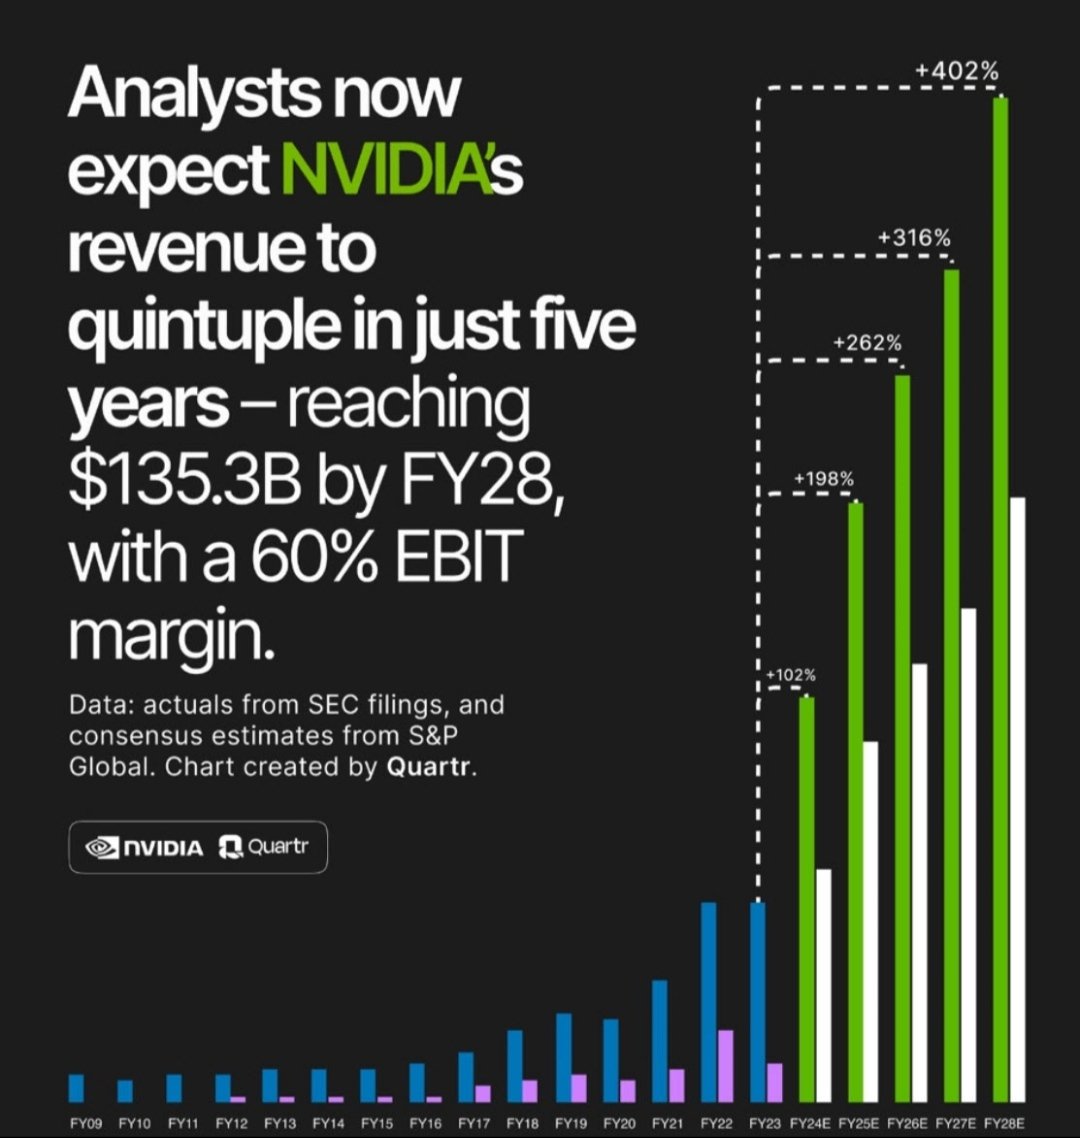 NVIDIA 206 Revenue Increase for Q324 Analyst Predict 400 Revenue